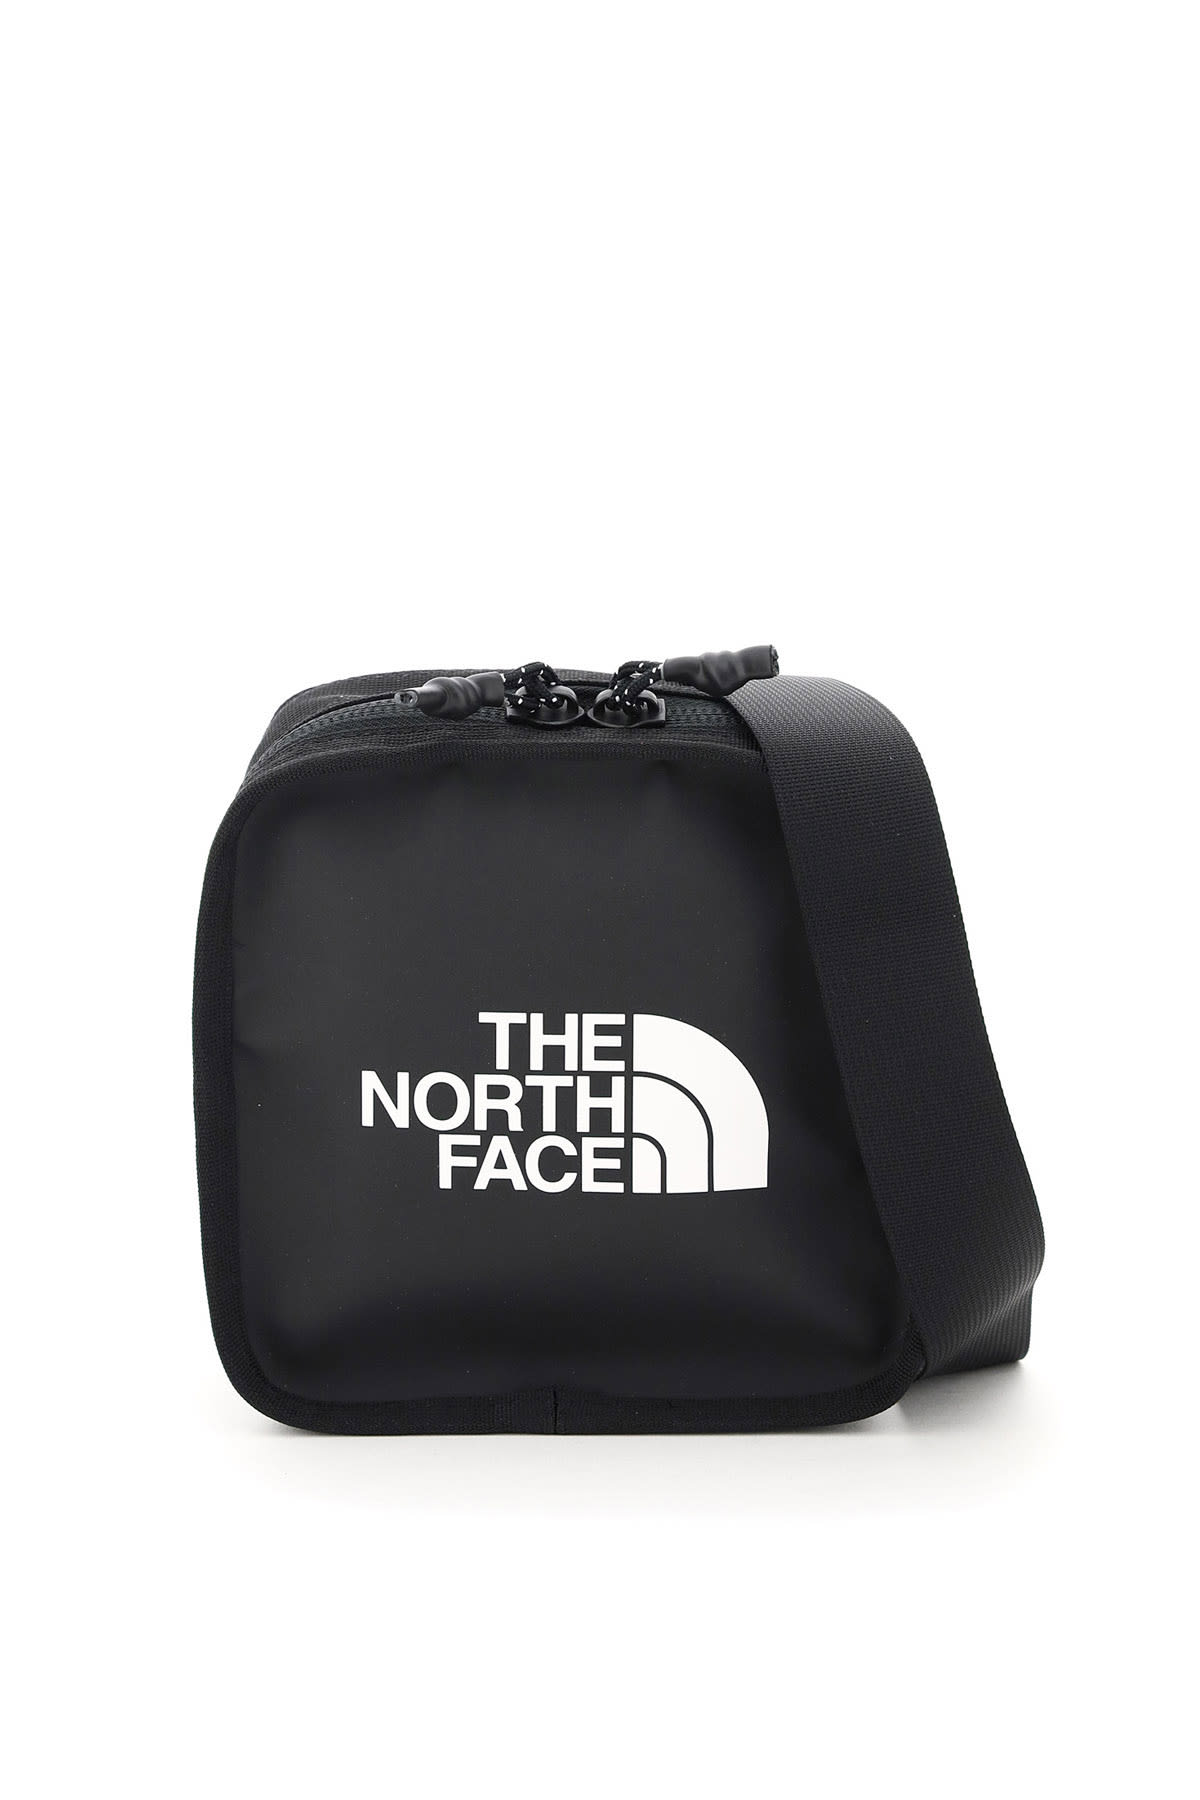 THE NORTH FACE LOGO PRINT MESSENGER BAG,NF0A3VWS KY4